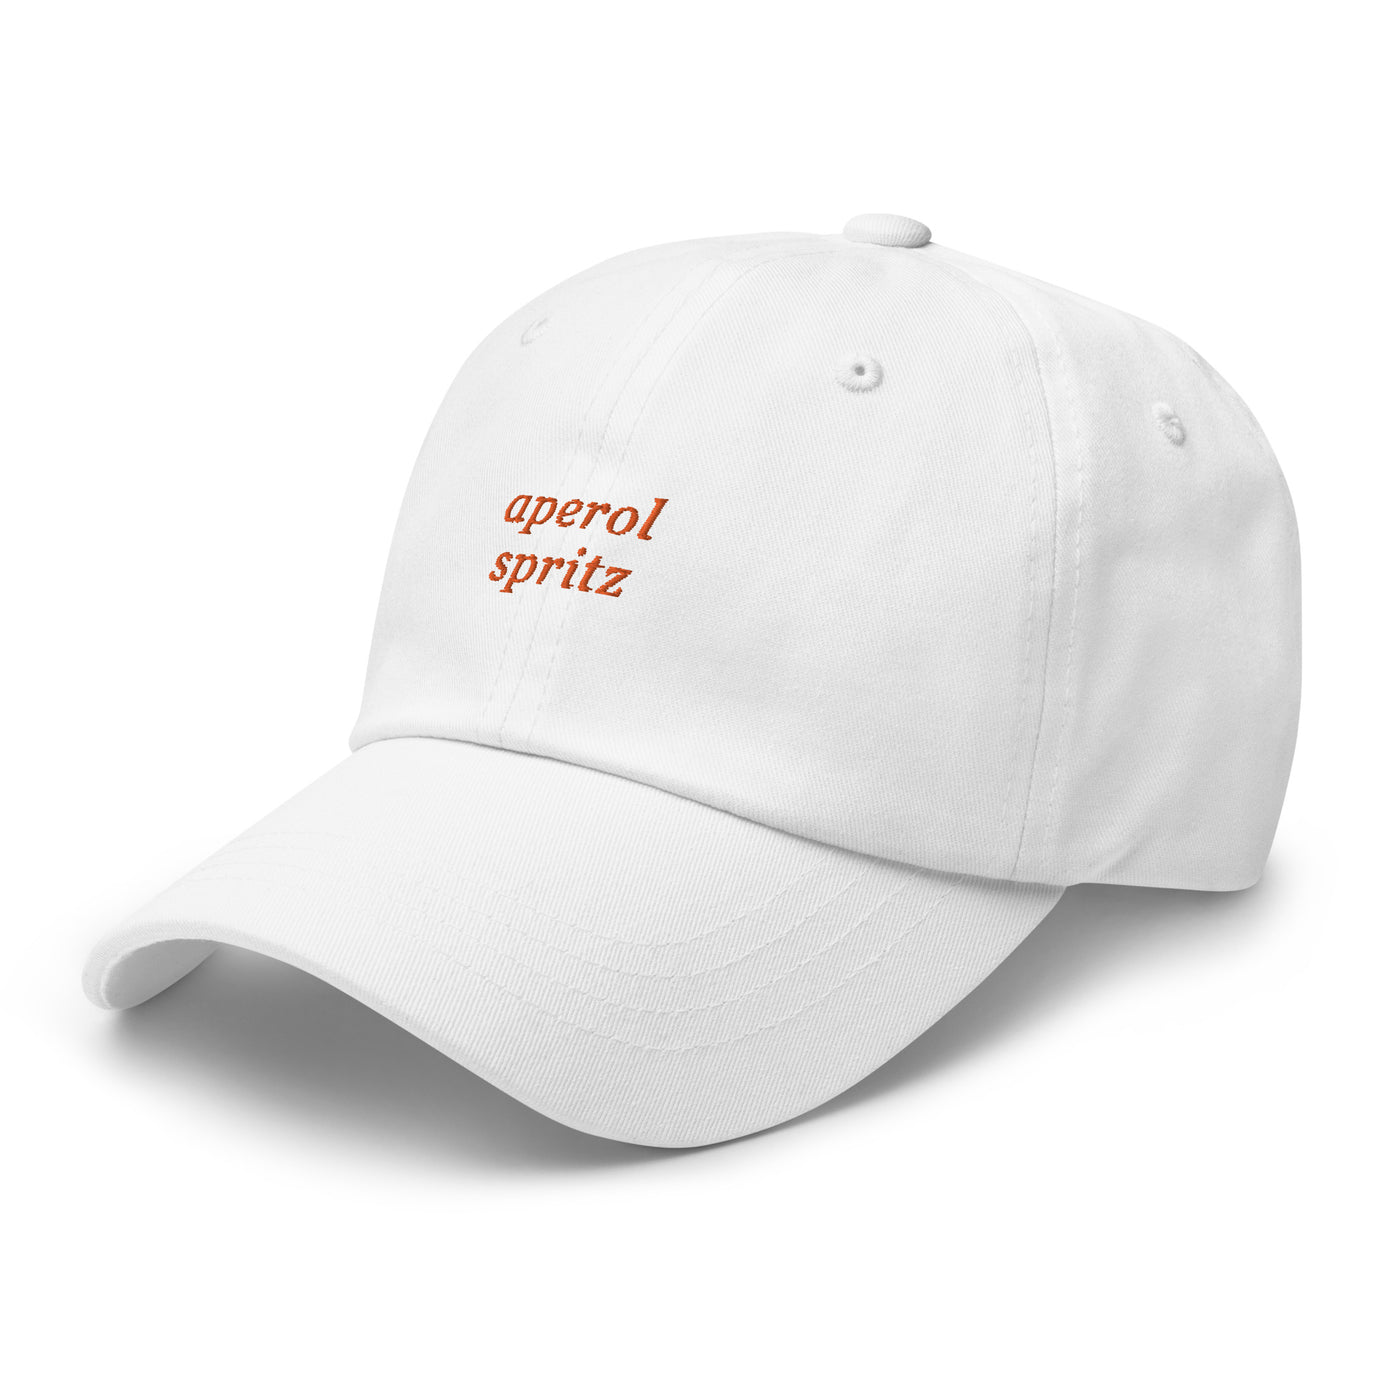 "Aperol Spritz" Embroidered Drink Order Hat (White)